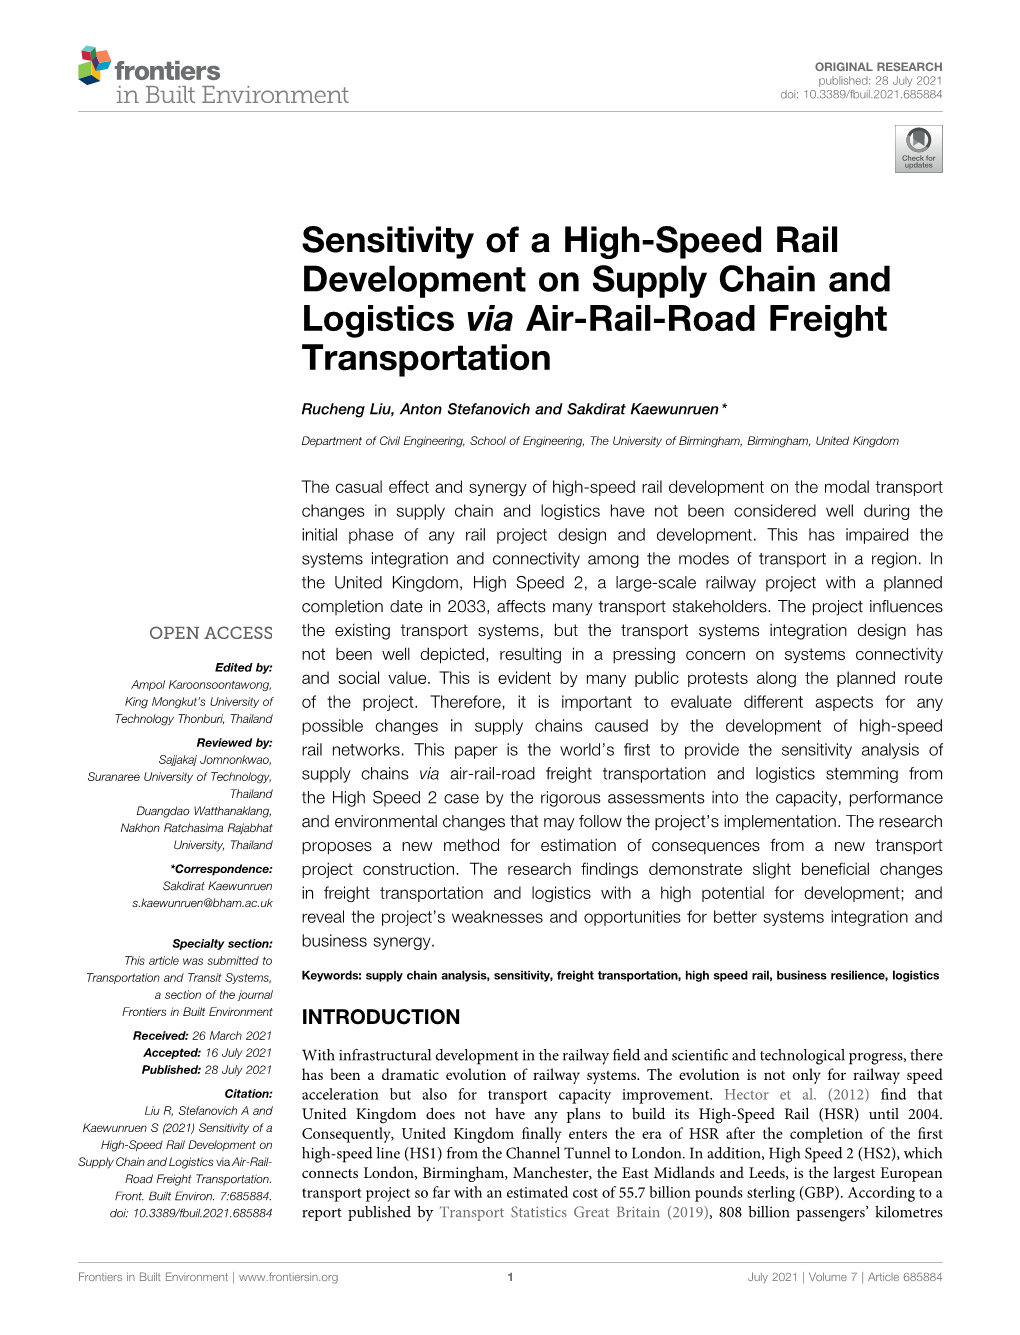 Sensitivity of a High-Speed Rail Development on Supply Chain and Logistics Via Air-Rail-Road Freight Transportation